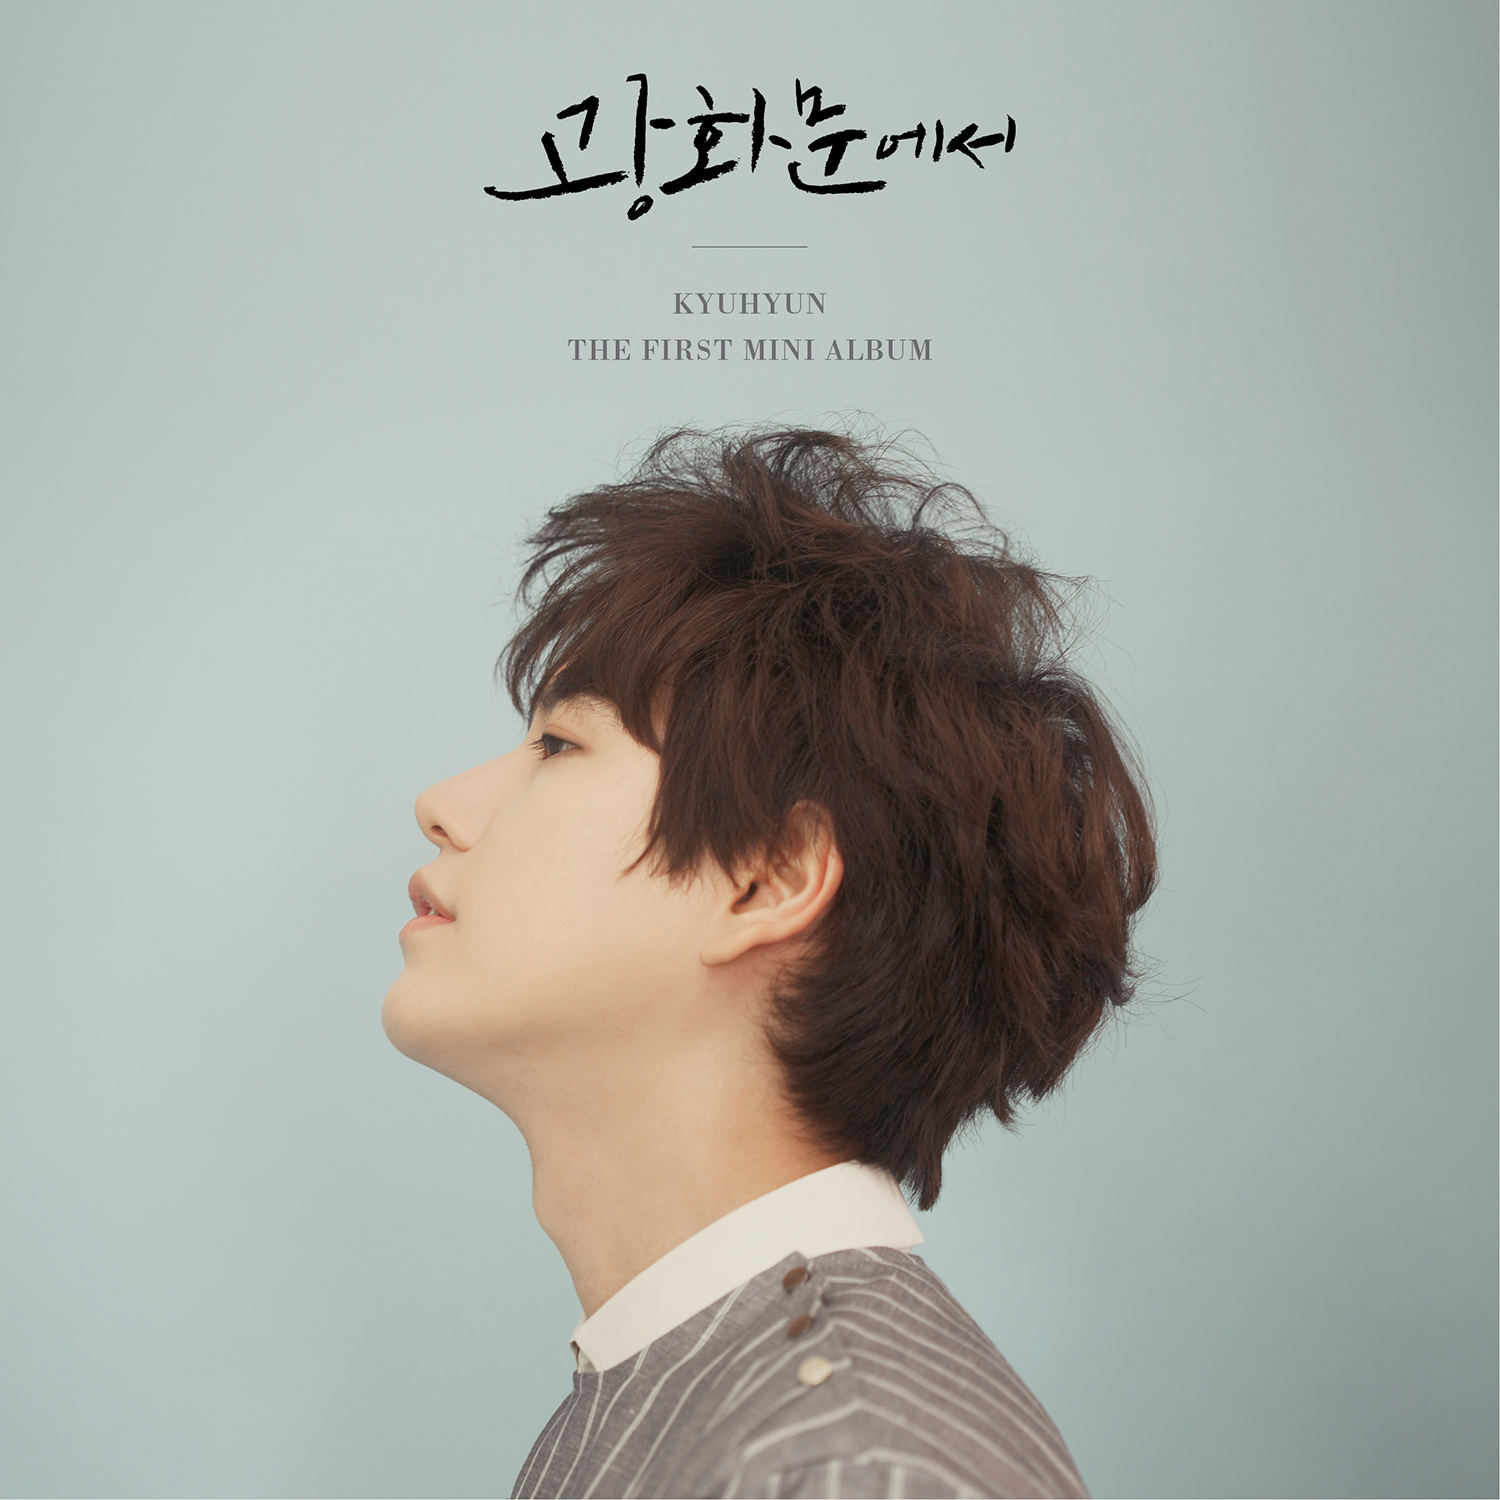 Image result for kyuhyun at gwanghwamun album cover